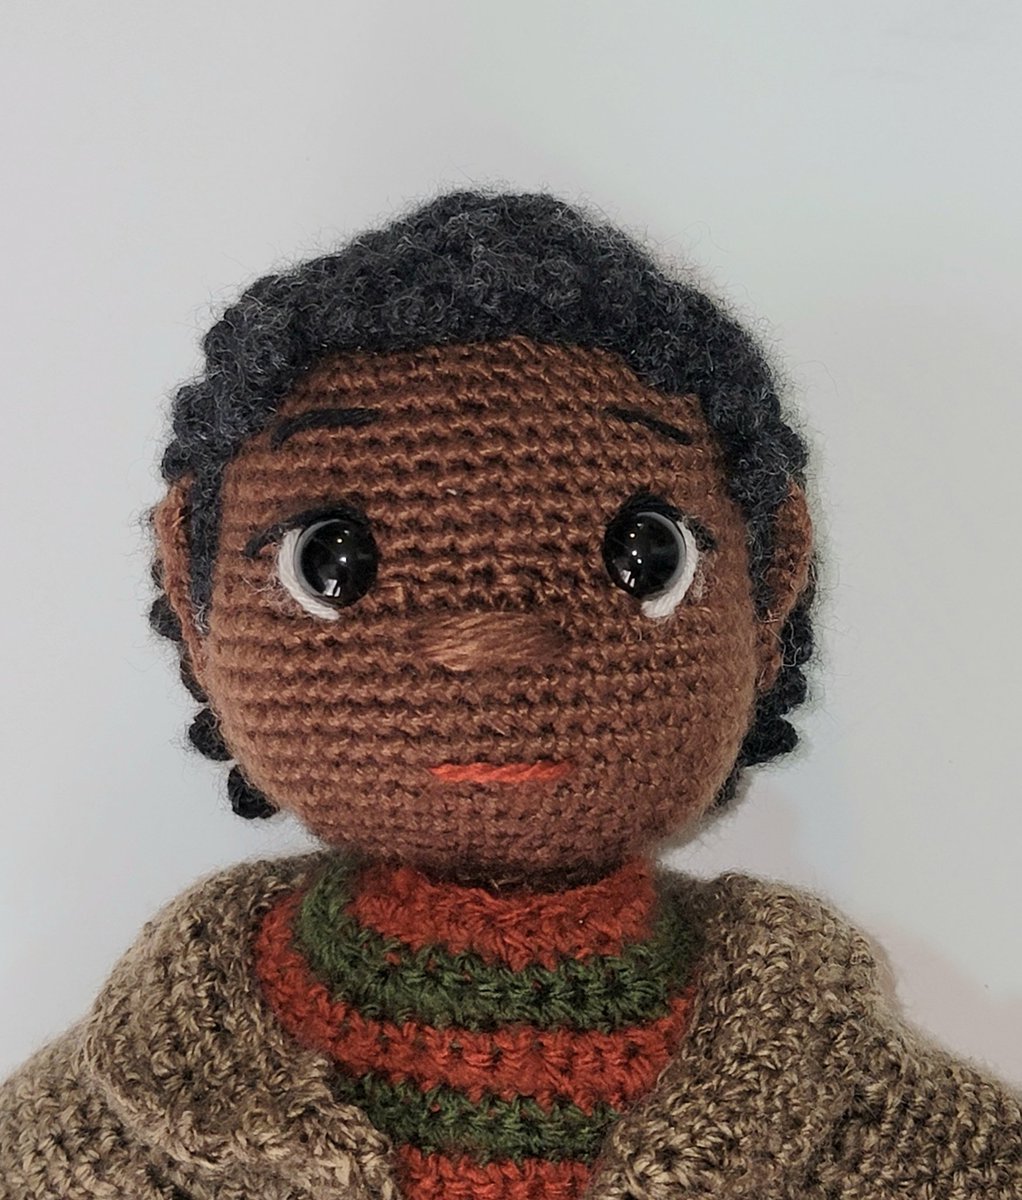 Enjoying Crochet LLC presents... Willis A new doll member available for adoption here... enjoyingcrochetllc.ecrater.com/p/42985455/han… LIKE, SHARE, VISIT, ADOPT #crochet #crocheting #crochetdolls Follow me here... Facebook.com/EnjoyingCrochet Instagram.com/enjoyingcrochet twitter.com/EnjoyingCroche1